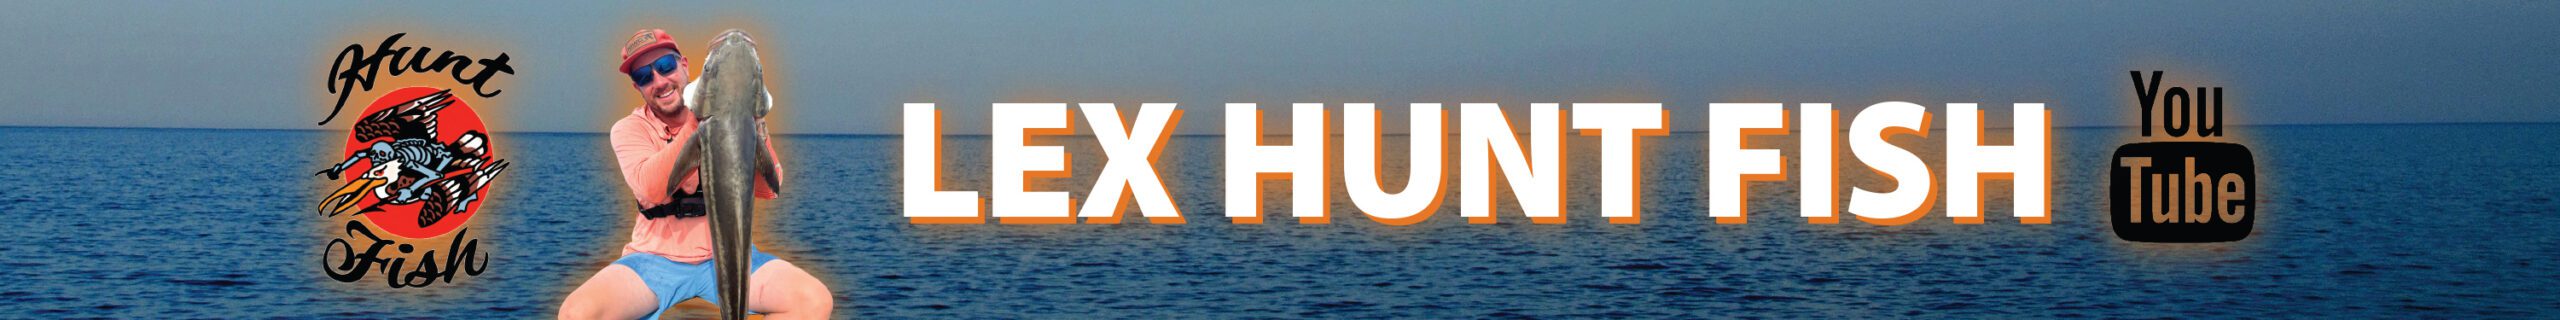 Lex Hunt Fish_banner